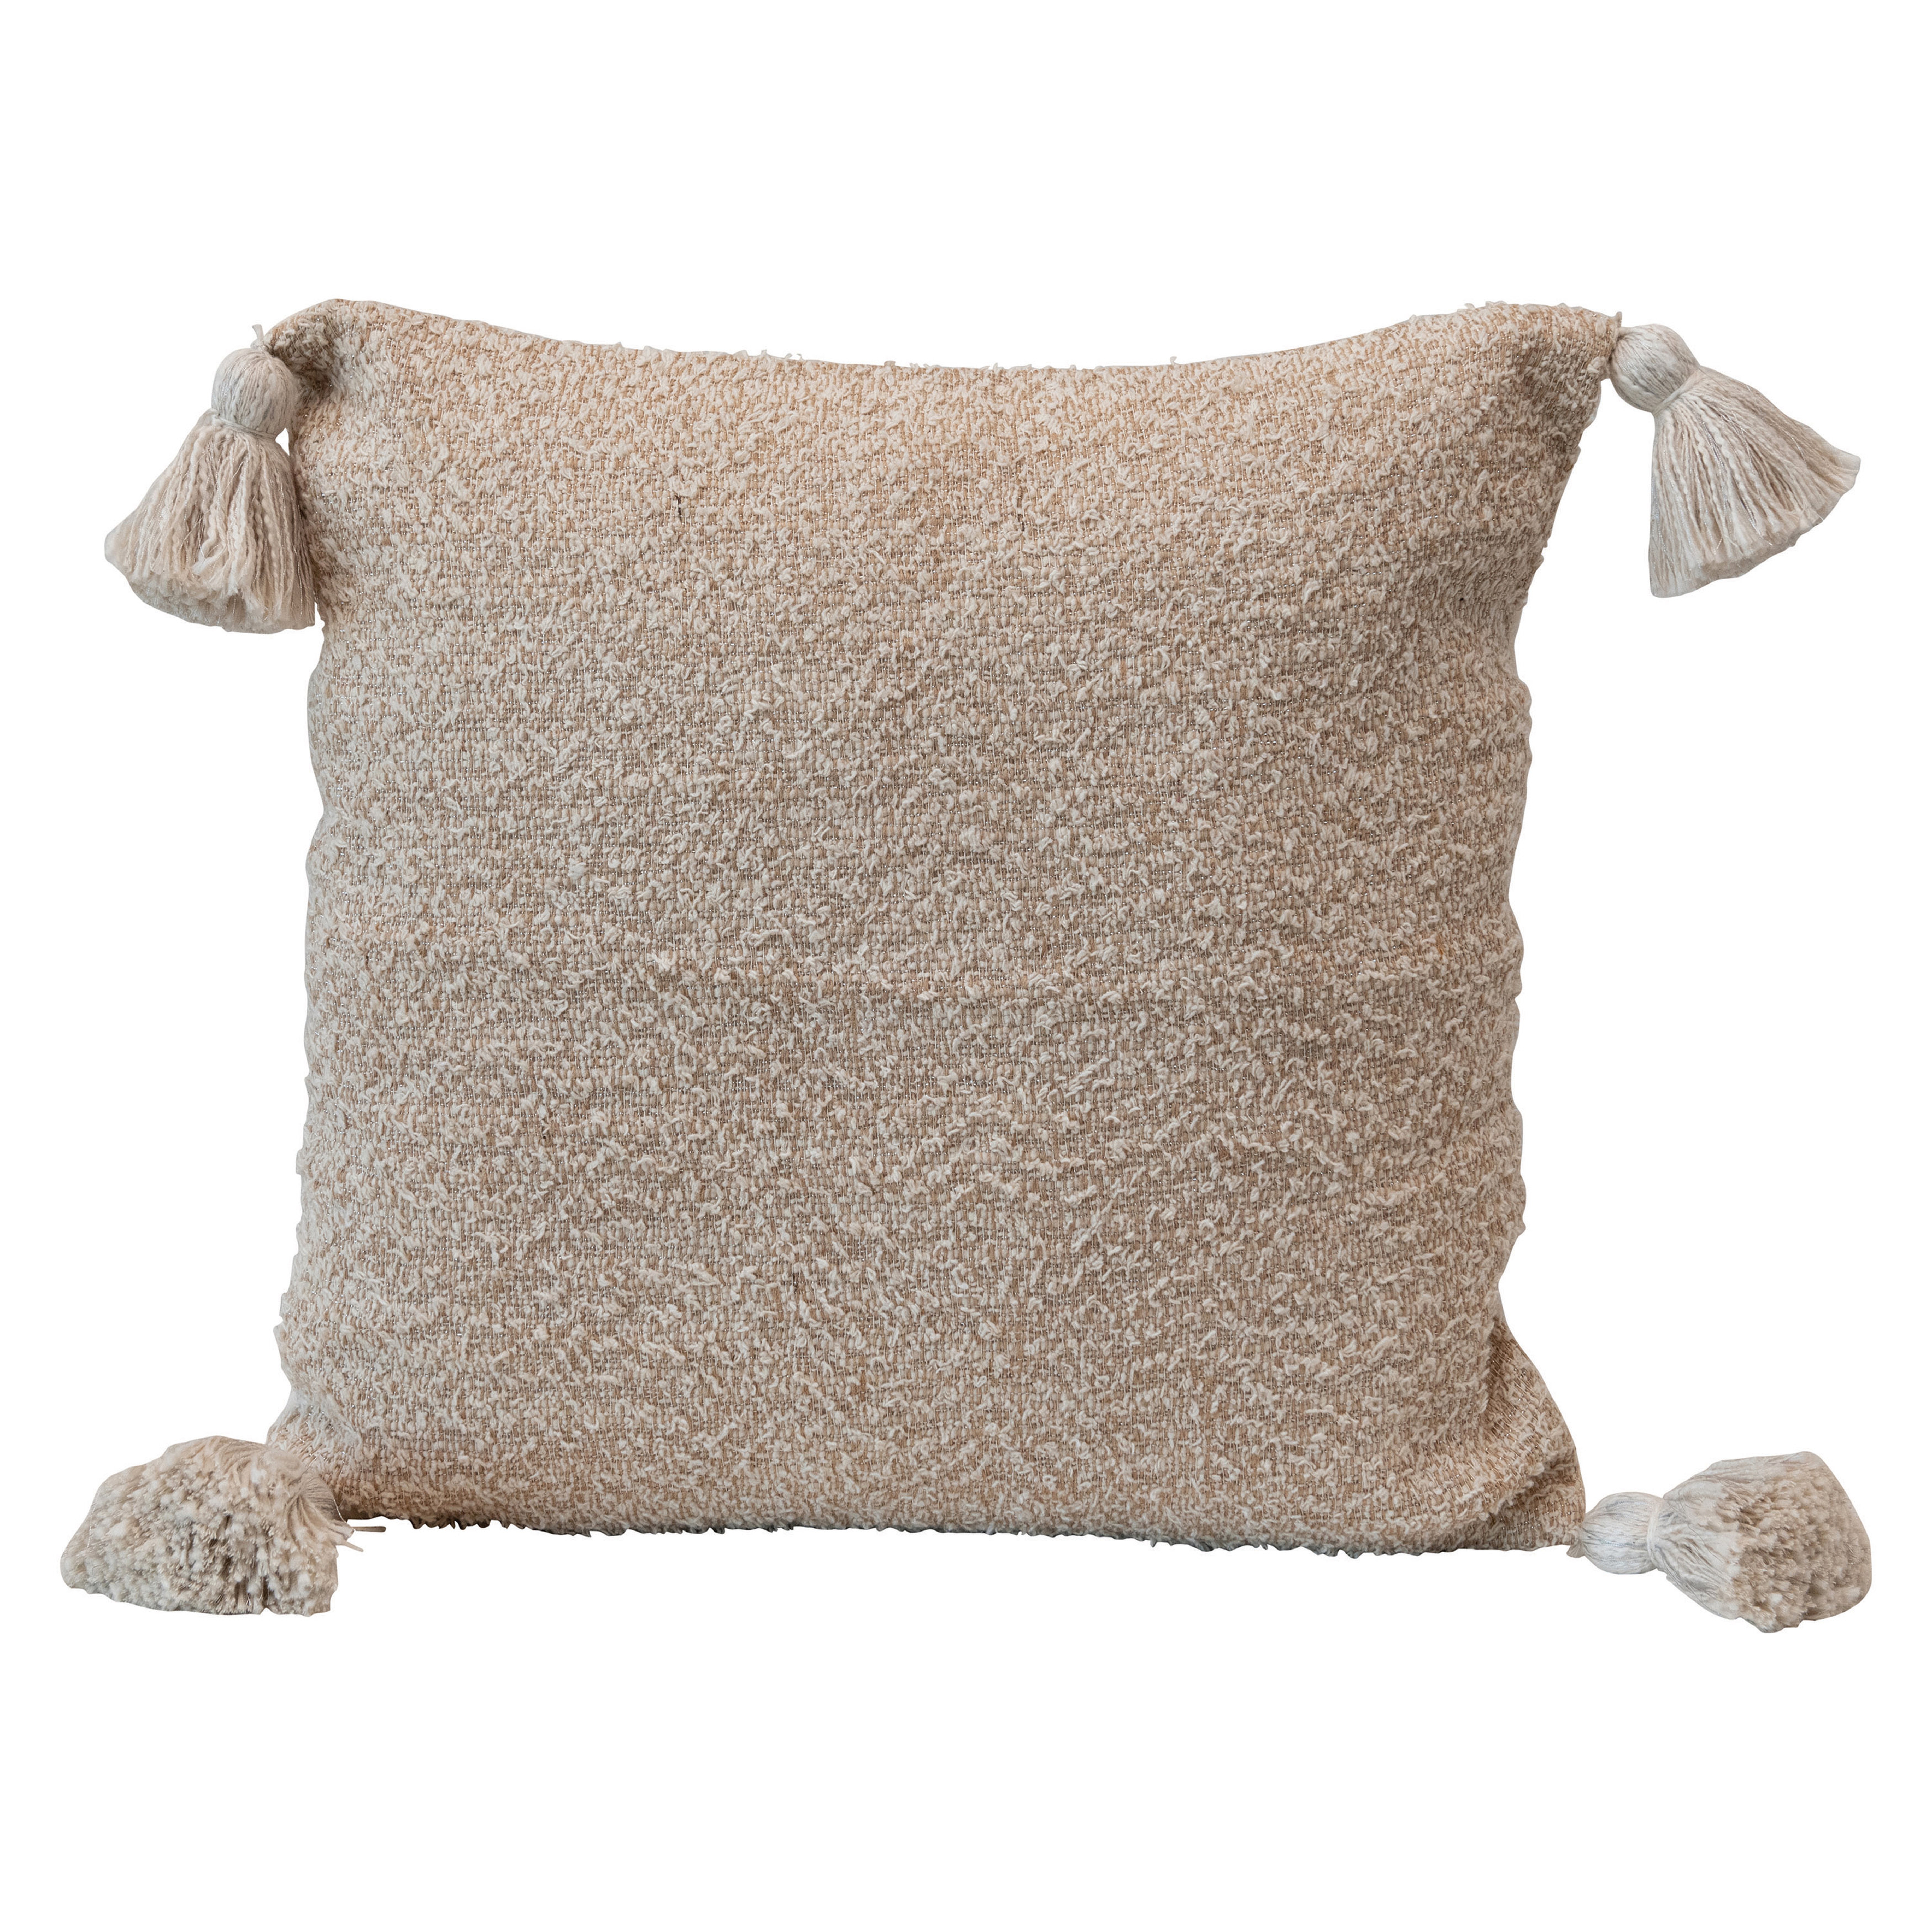 Woven Cotton Blend Lumbar Pillow with Metallic Thread & Tassels, Cream & Tan, 20" x 20" - Nomad Home